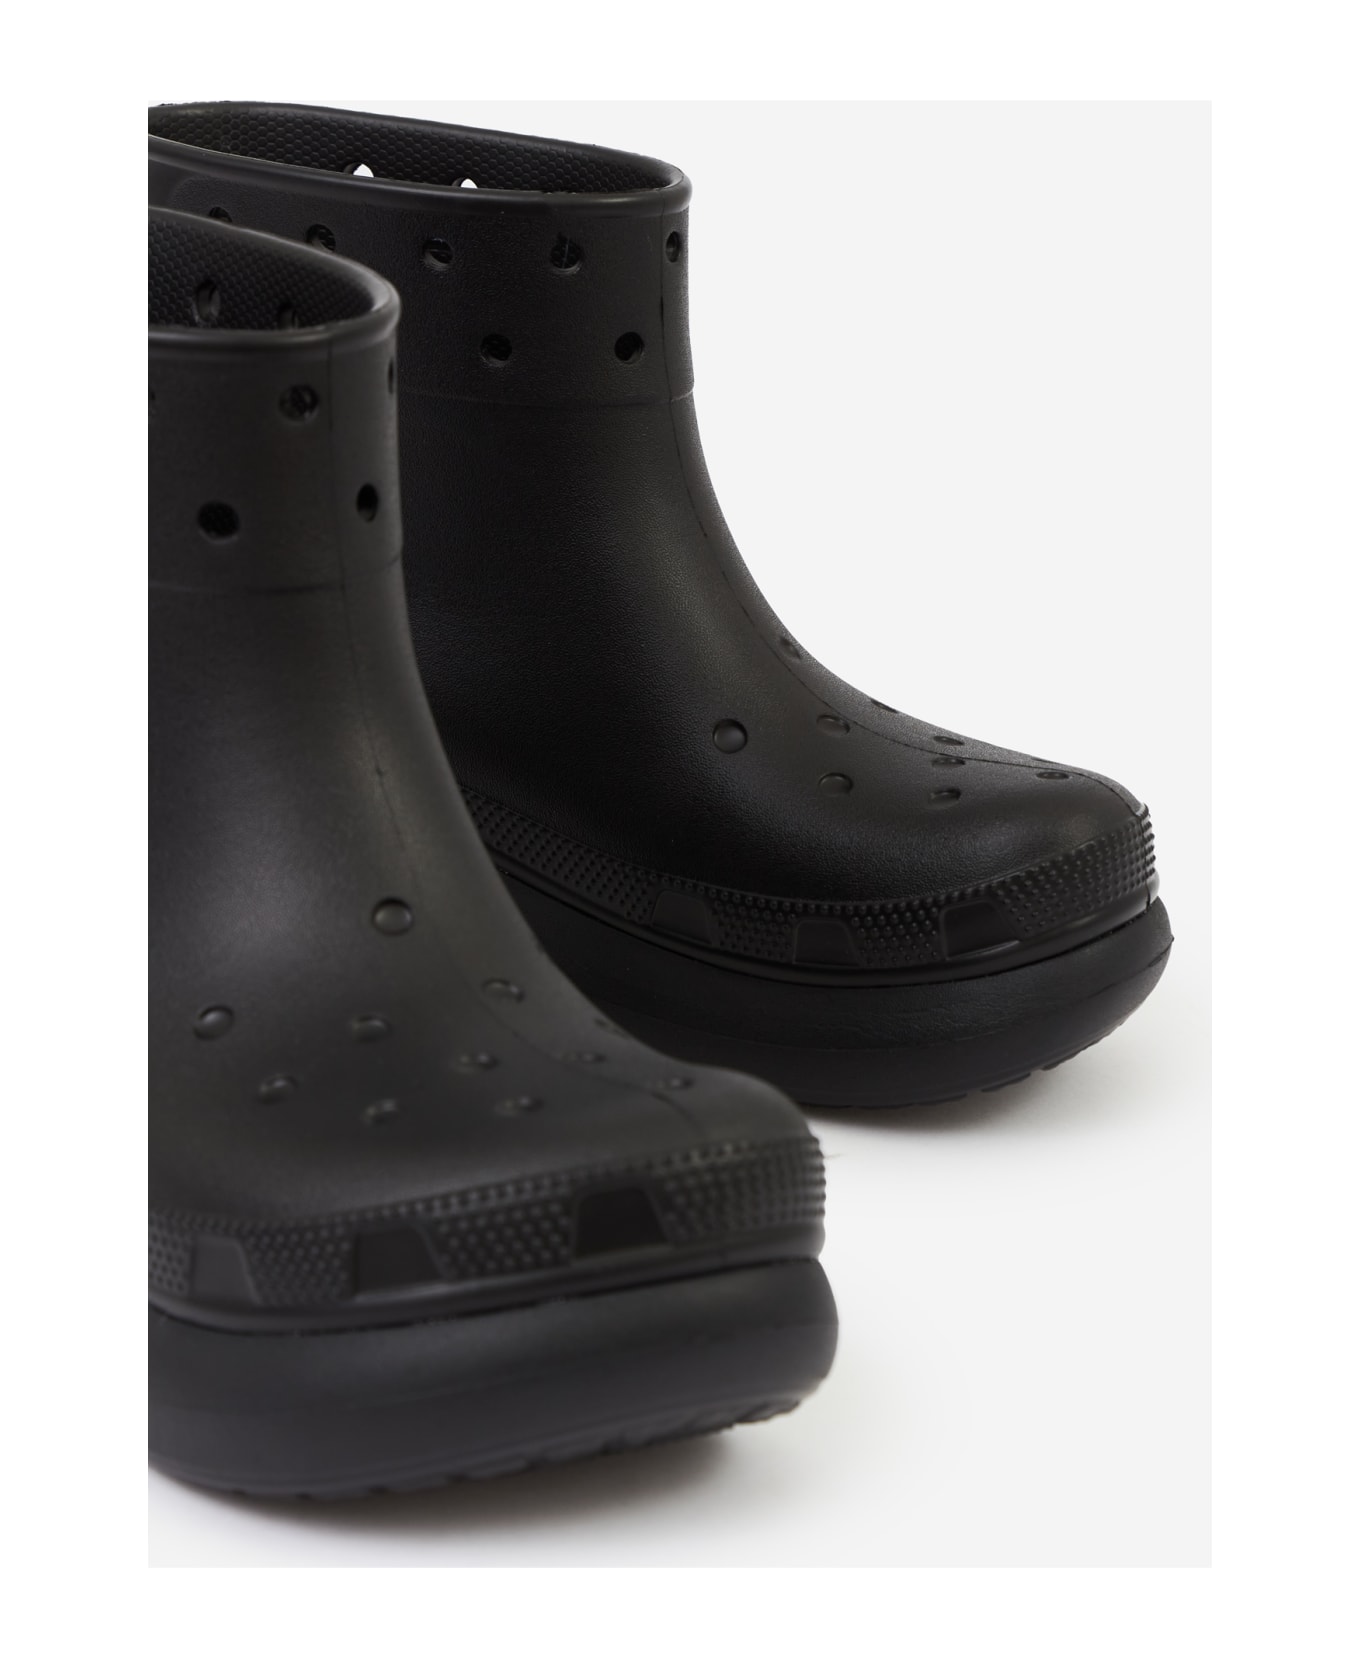 Crocs Crush Rain Boot Boots - Black